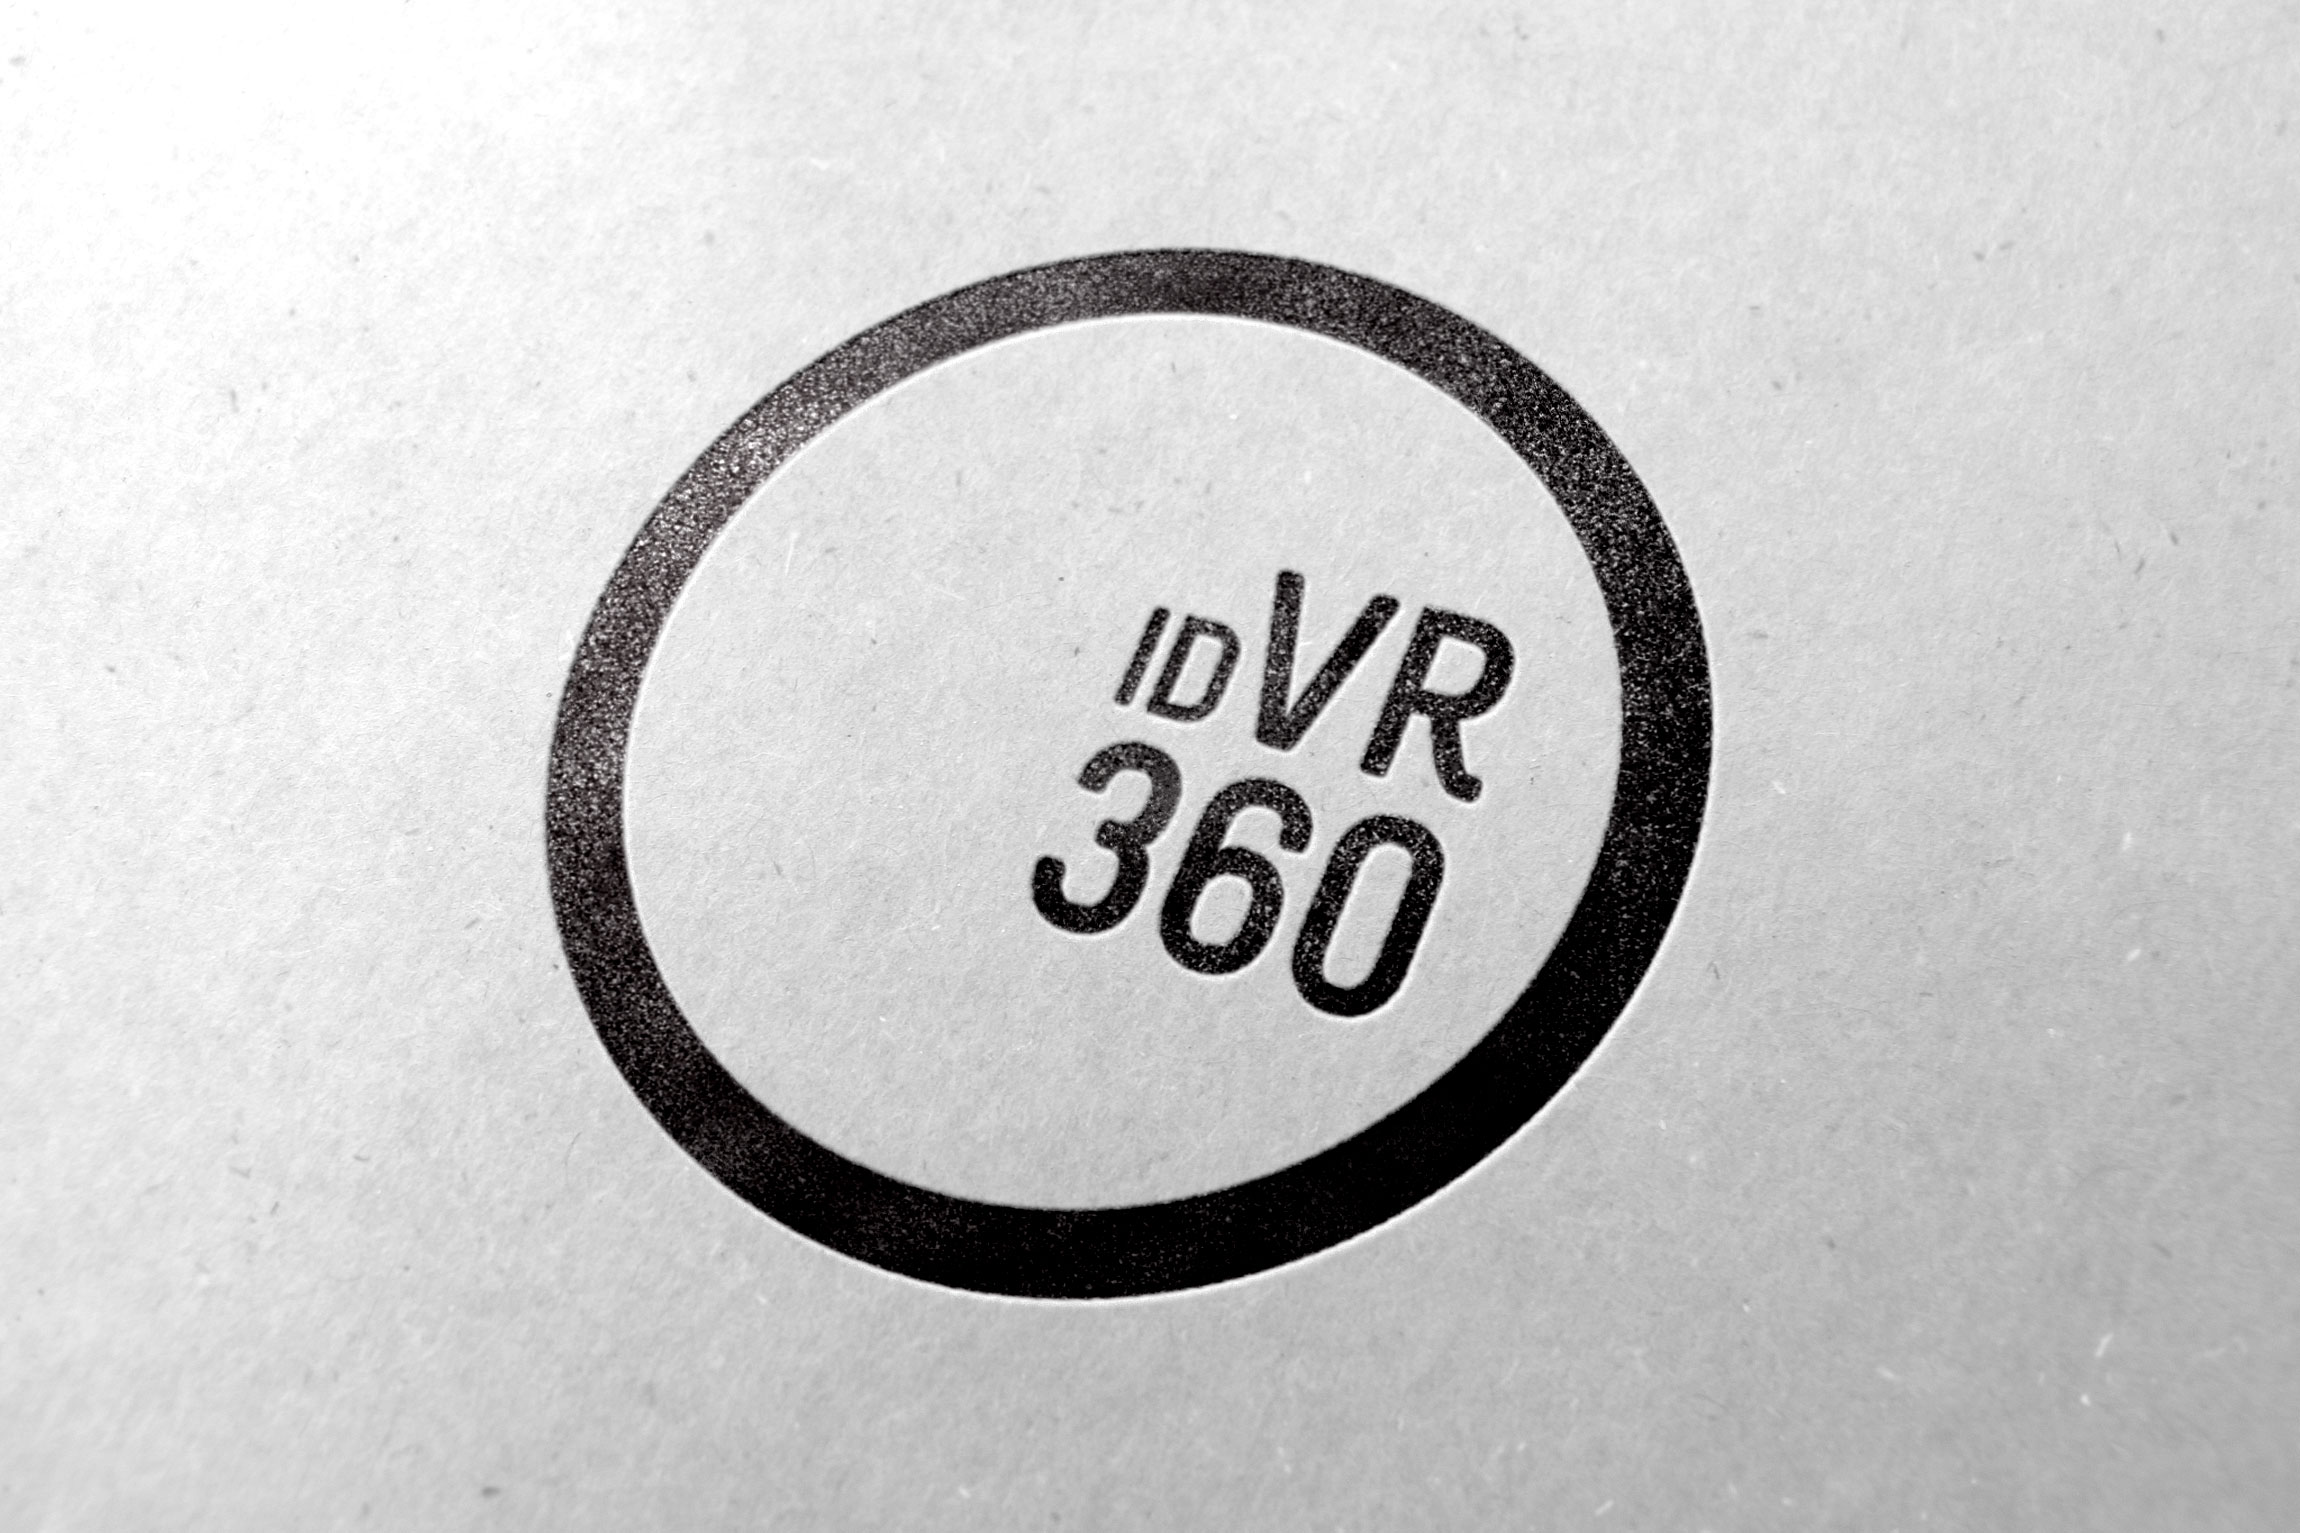 idVR360 - Identity